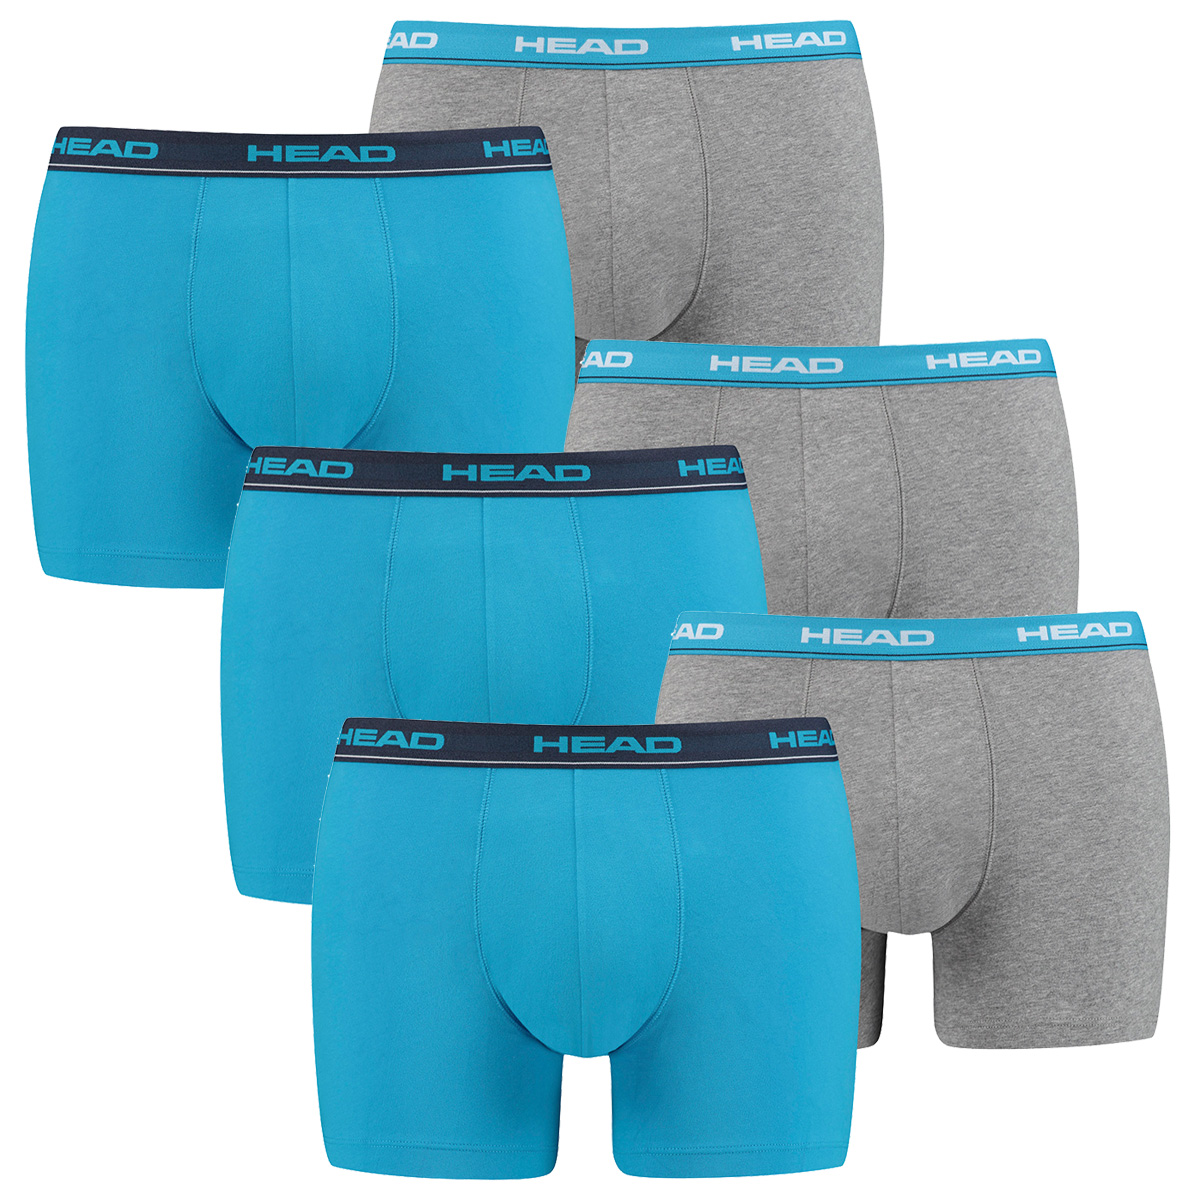 6 er Pack Head Herren Boxer Boxershorts Basic Pant Unterwäsche L, White/Blue/Grey